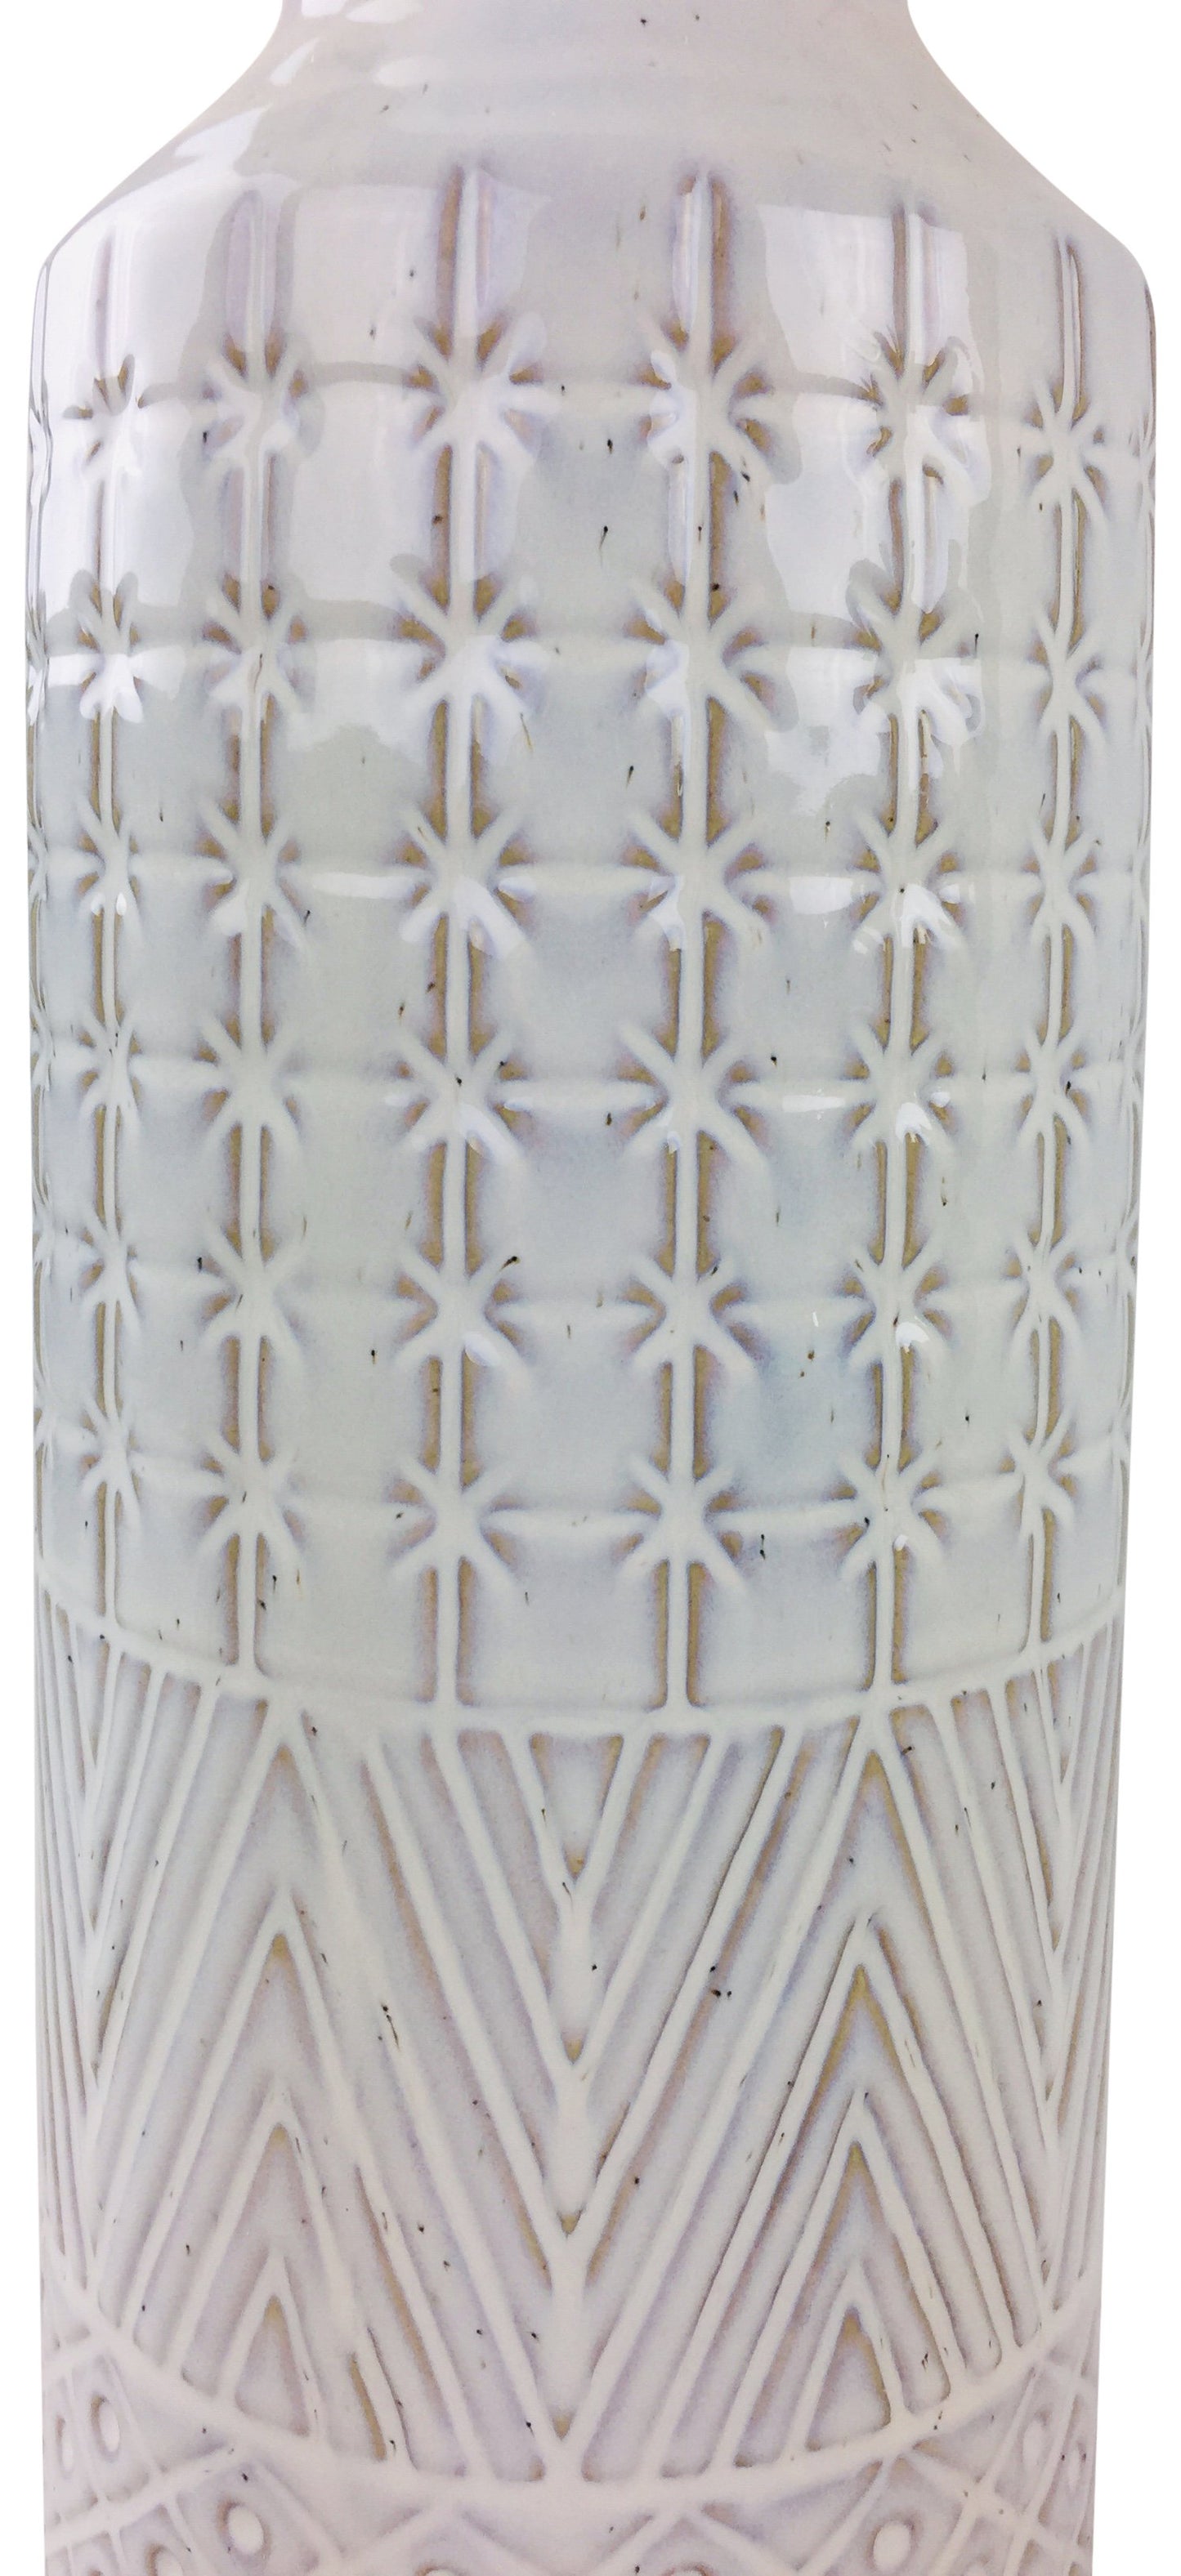 White Star Textured Stoneware Vase 44cm